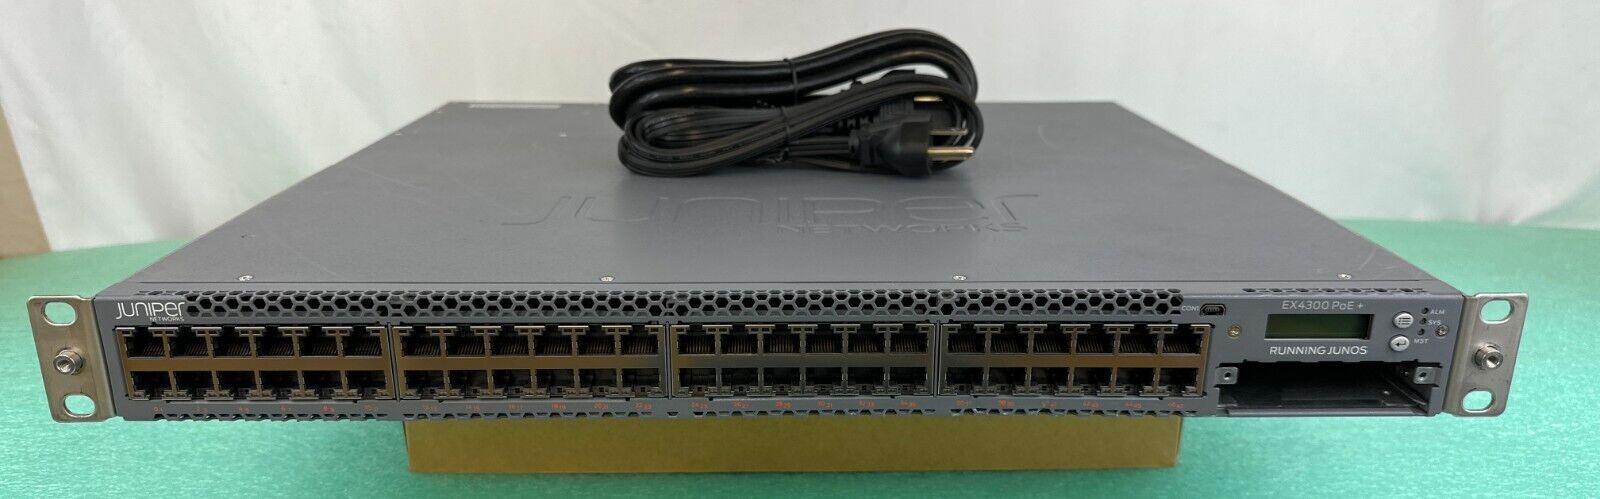 Juniper Networks EX4300-48P POE+ 48 Port Gigabit Switch Dual Power Supplies